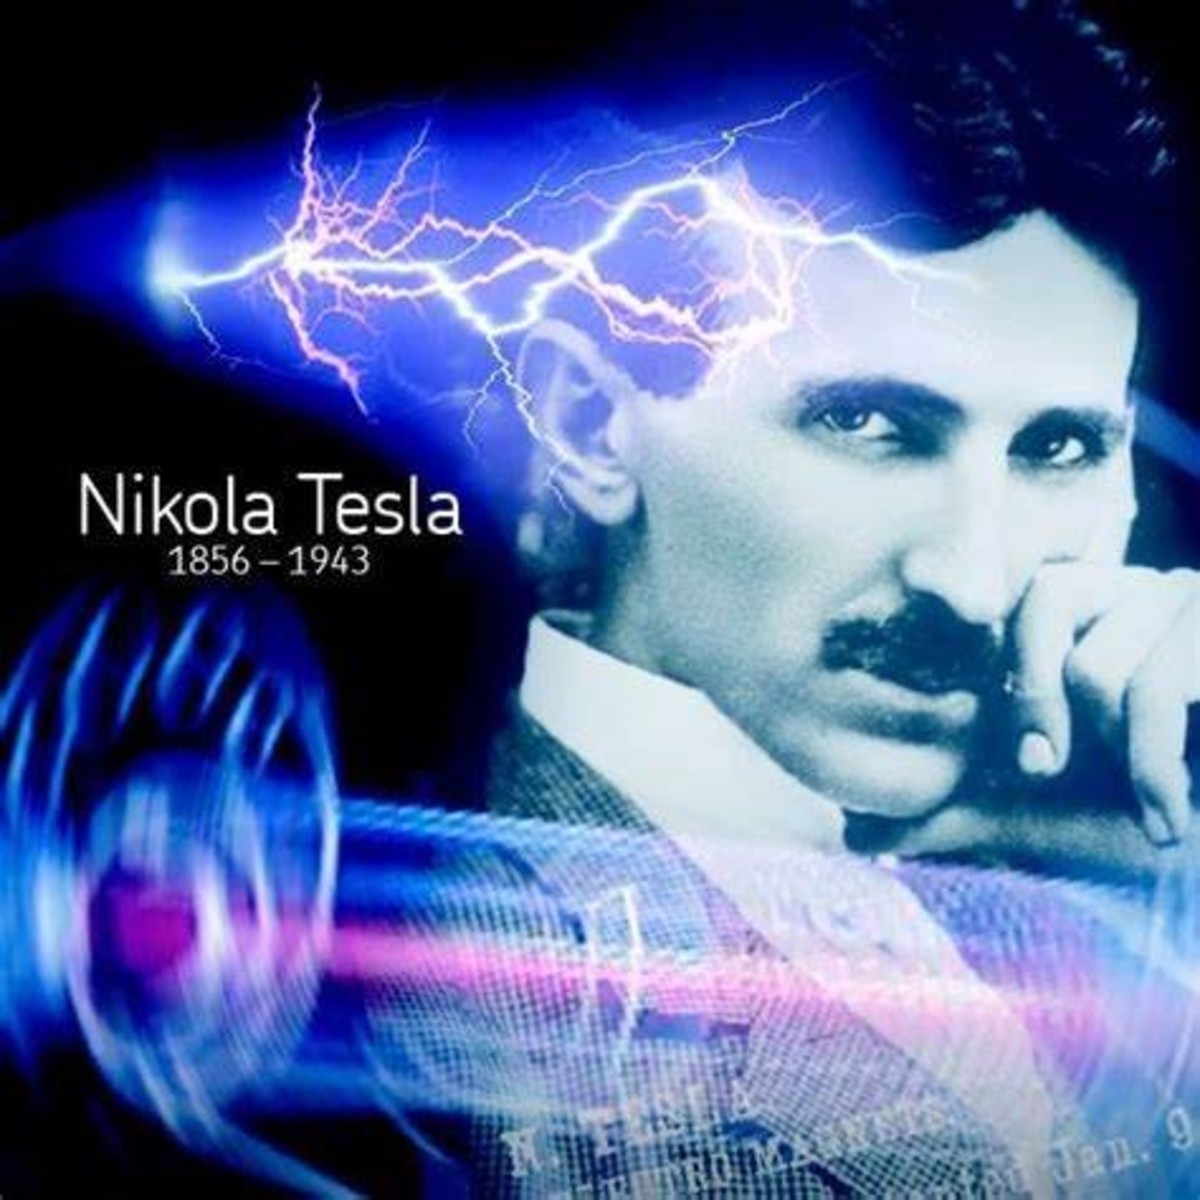 Nikola Tesla: Incredible Inventor and "Ahead of his Time"